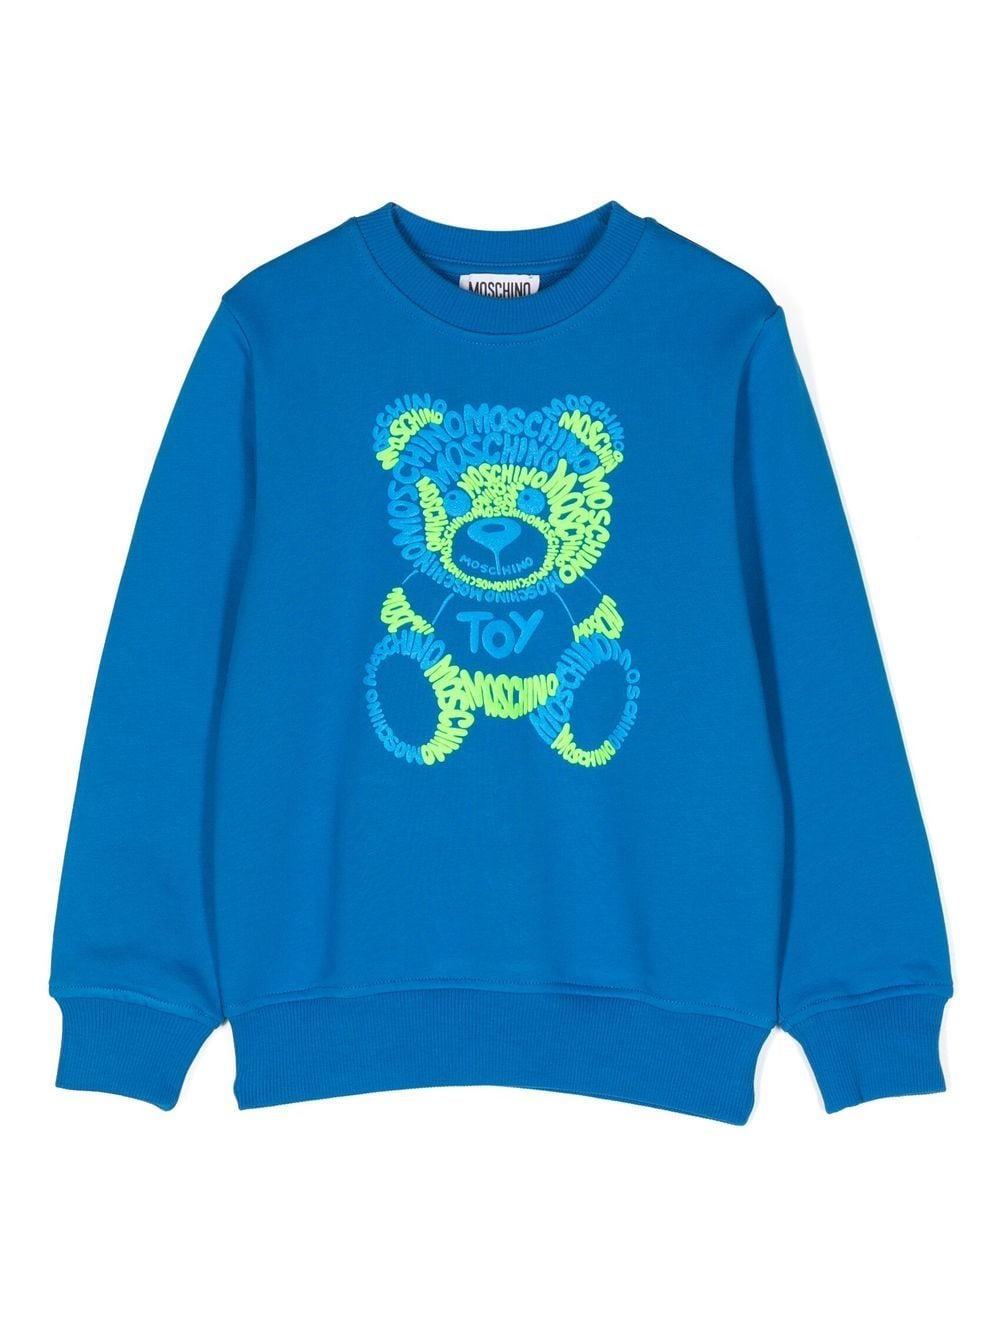 Blue sweatshirt for boys with print